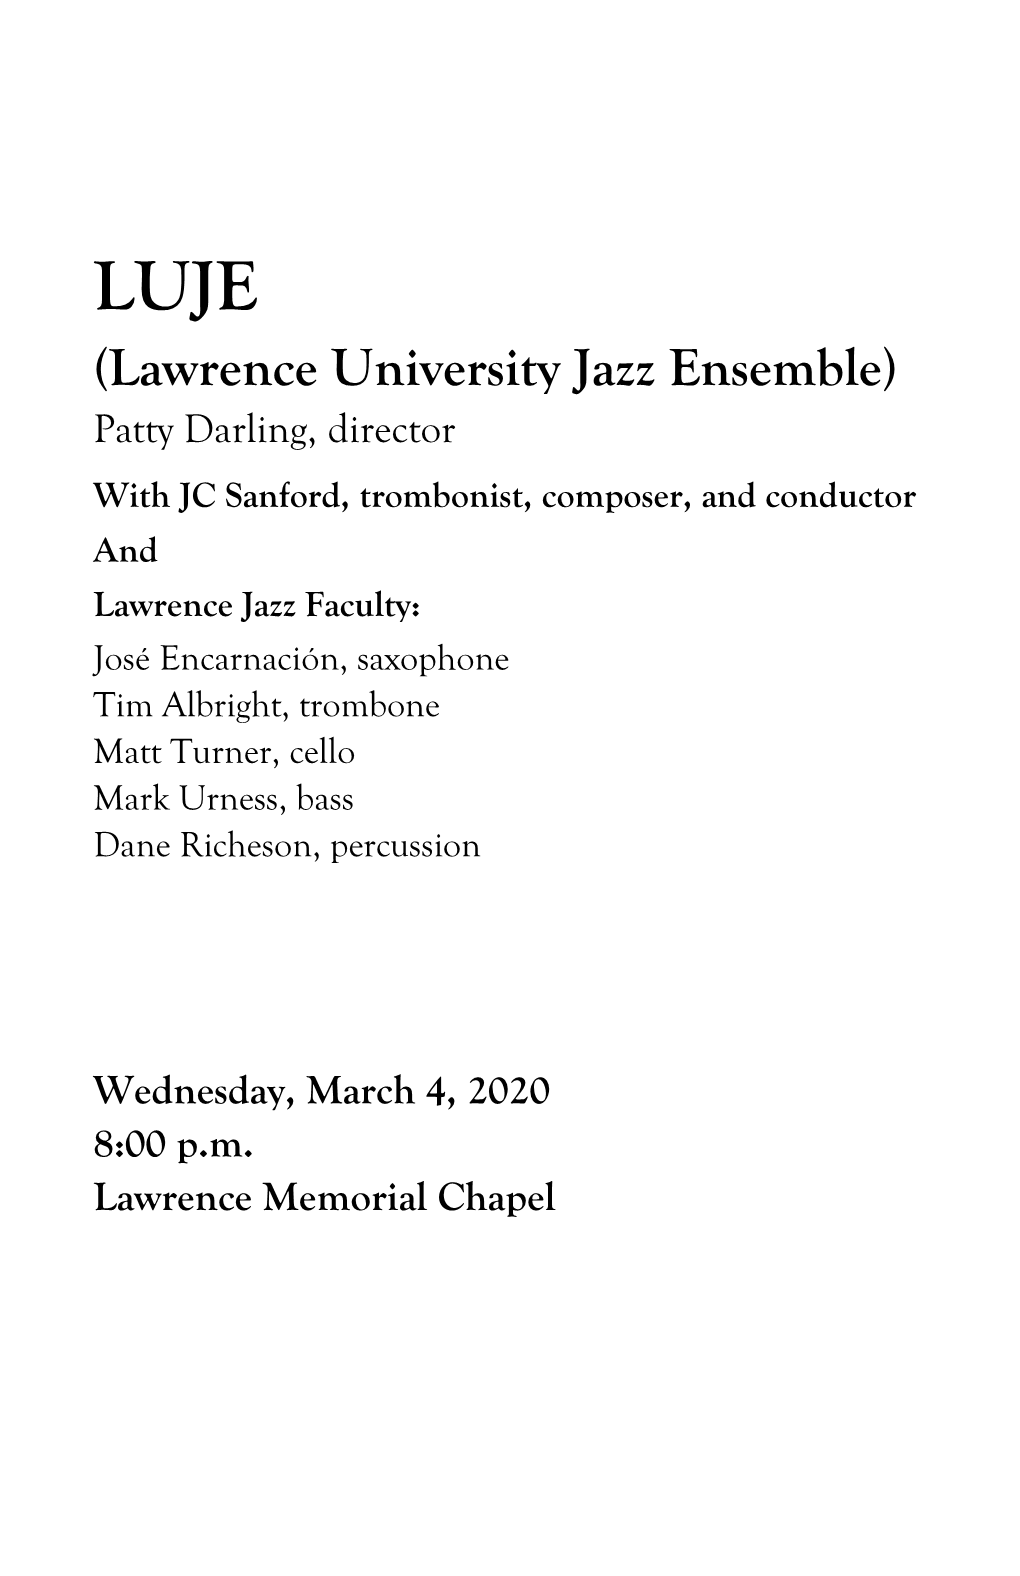 Lawrence University Jazz Ensemble